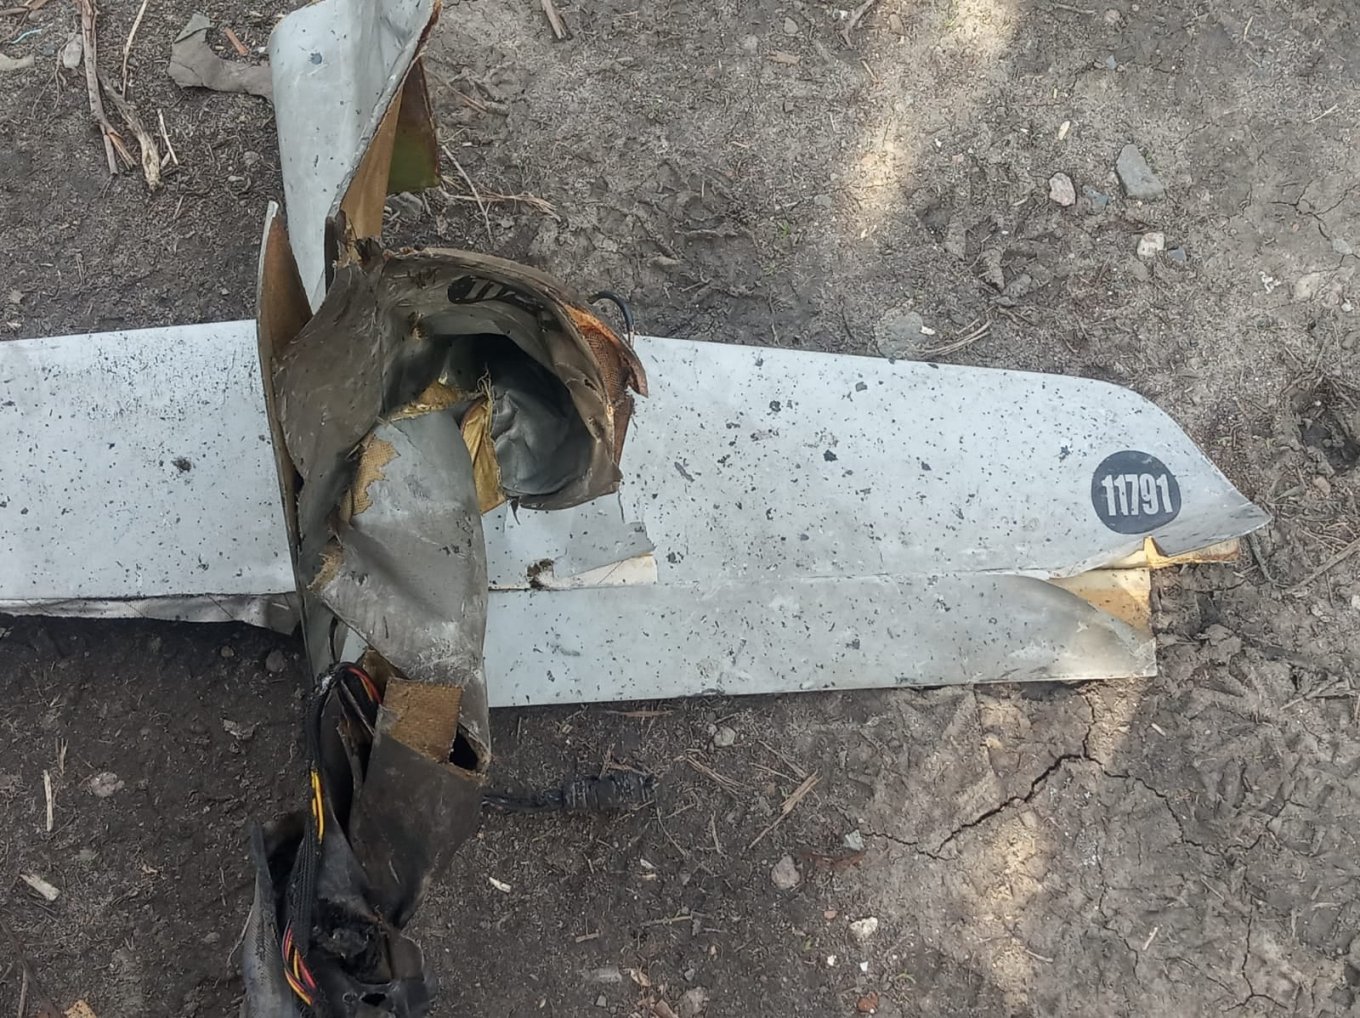 Ukrains Air Assault Forces shot down russia’s Orlan-10 UAV in Donetsk region, Defense Express